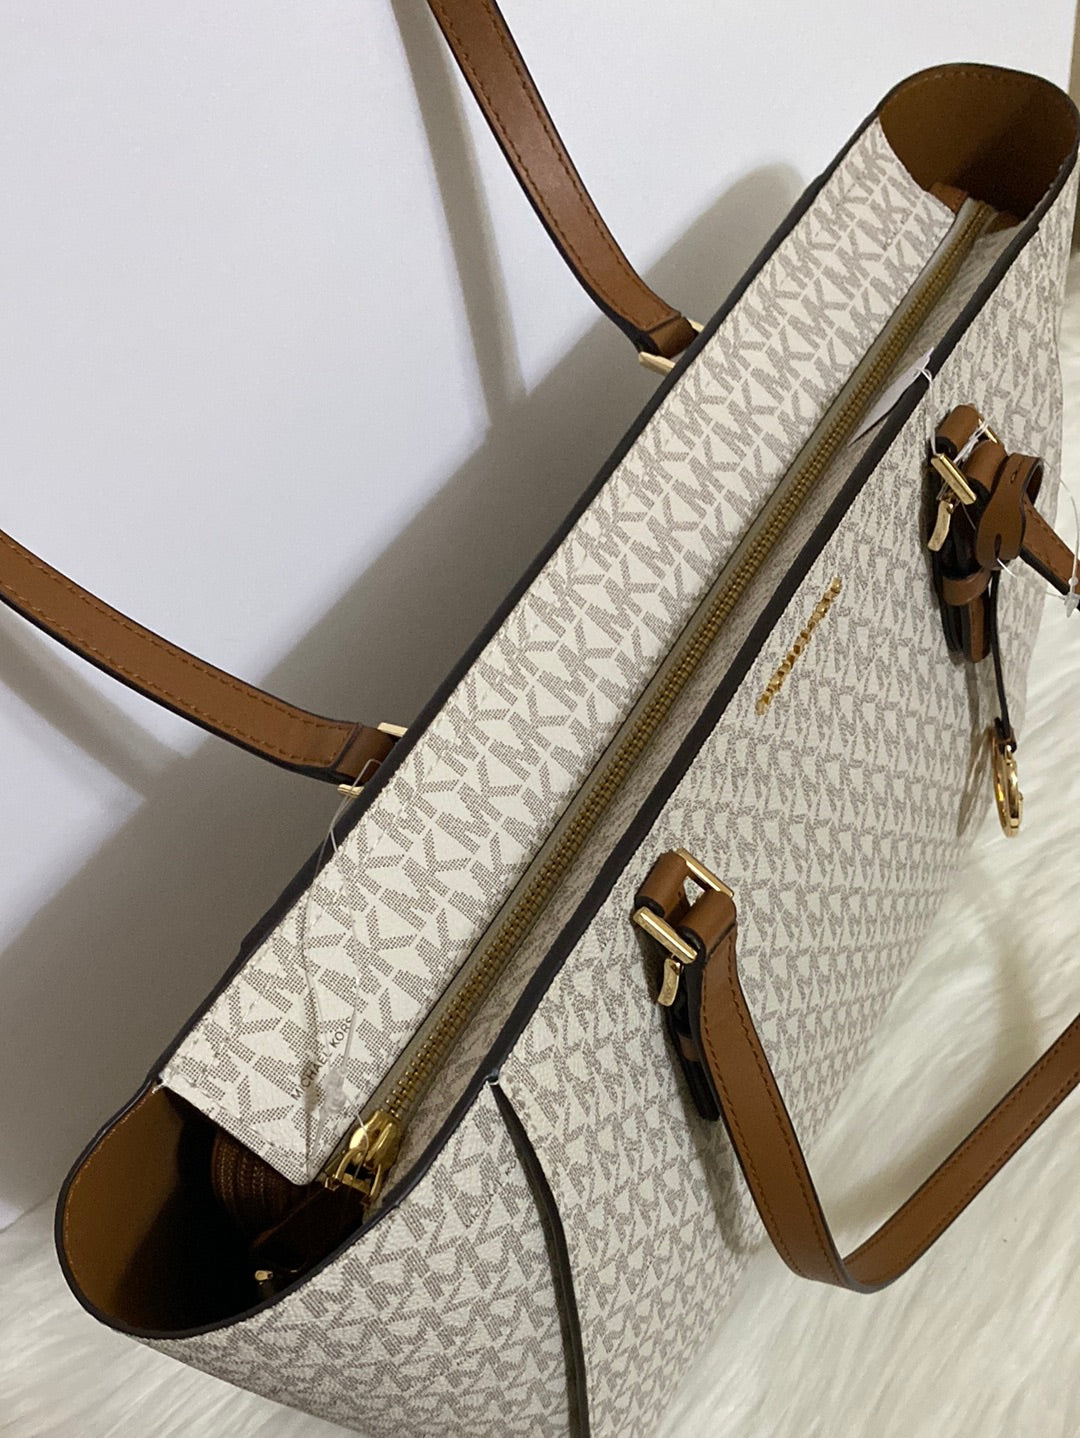 Michael Kors Large Tote With Laptop Case – Esys Handbags Boutique